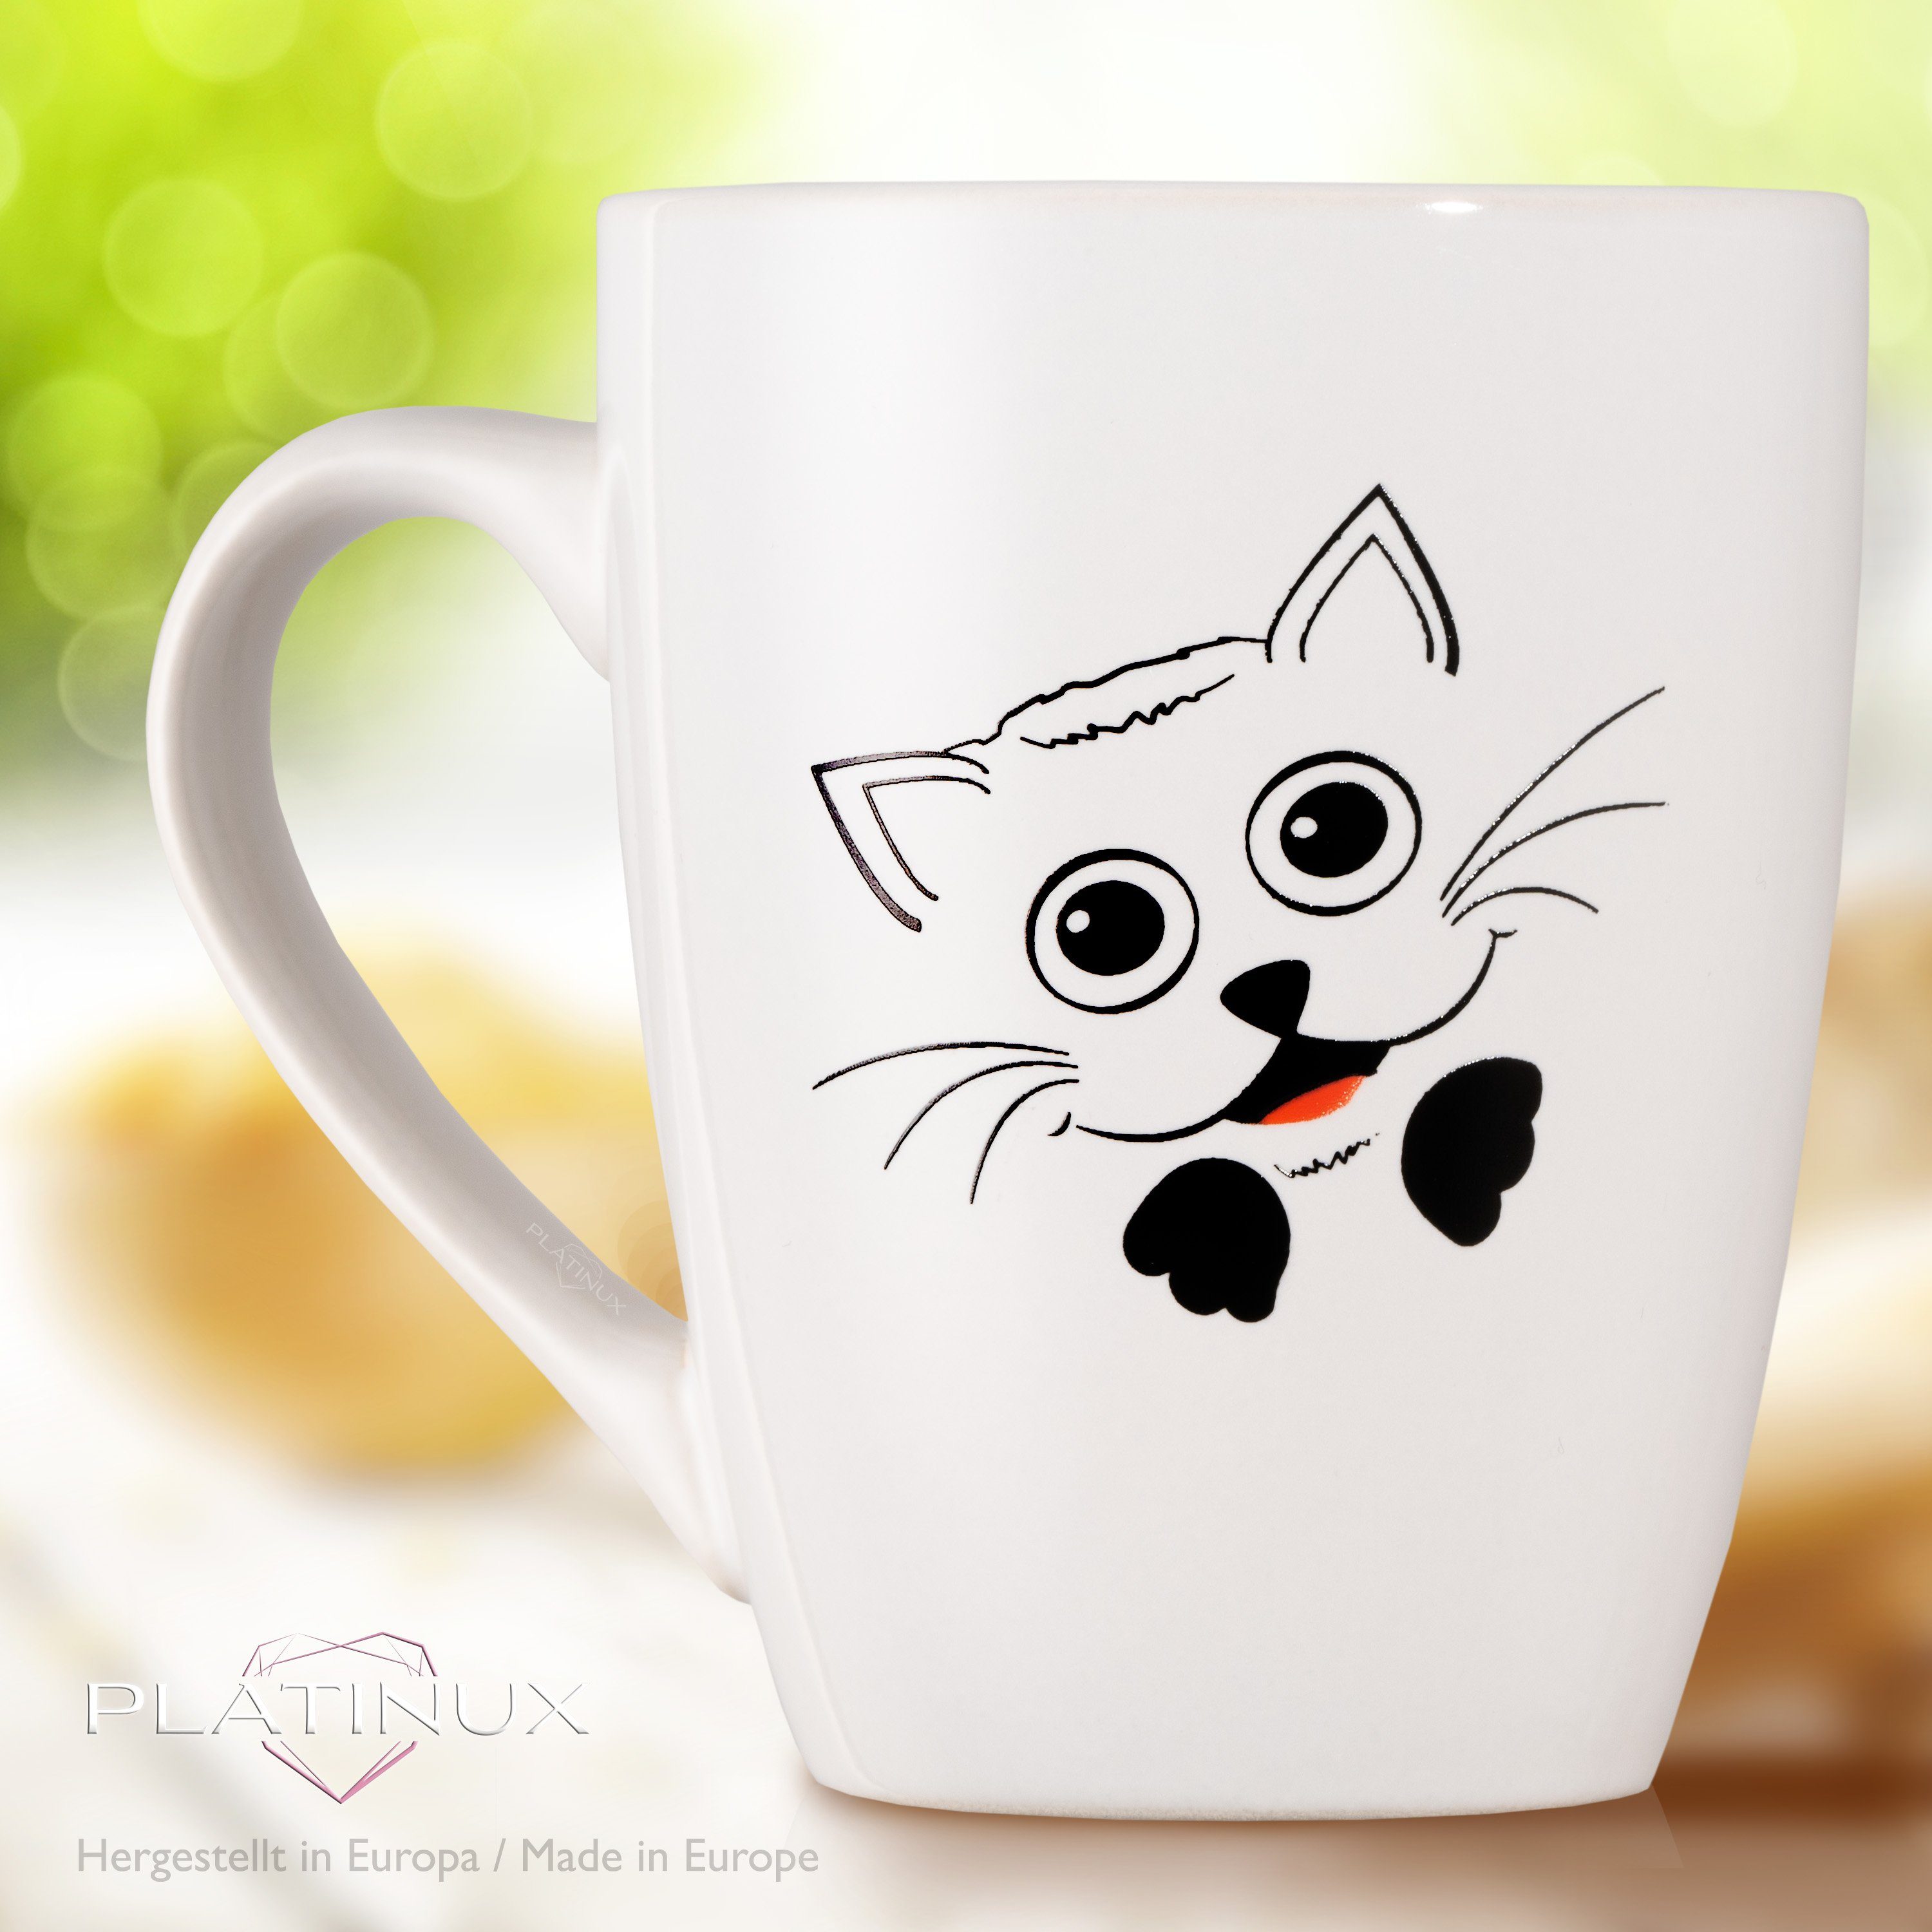 250ml, Griff Motiv Katzen Tasse Tasse Teebecher Keramik Kaffeebecher mit Kaffeetasse (max. Teetasse "Felix" 300ml) mit PLATINUX Keramik,